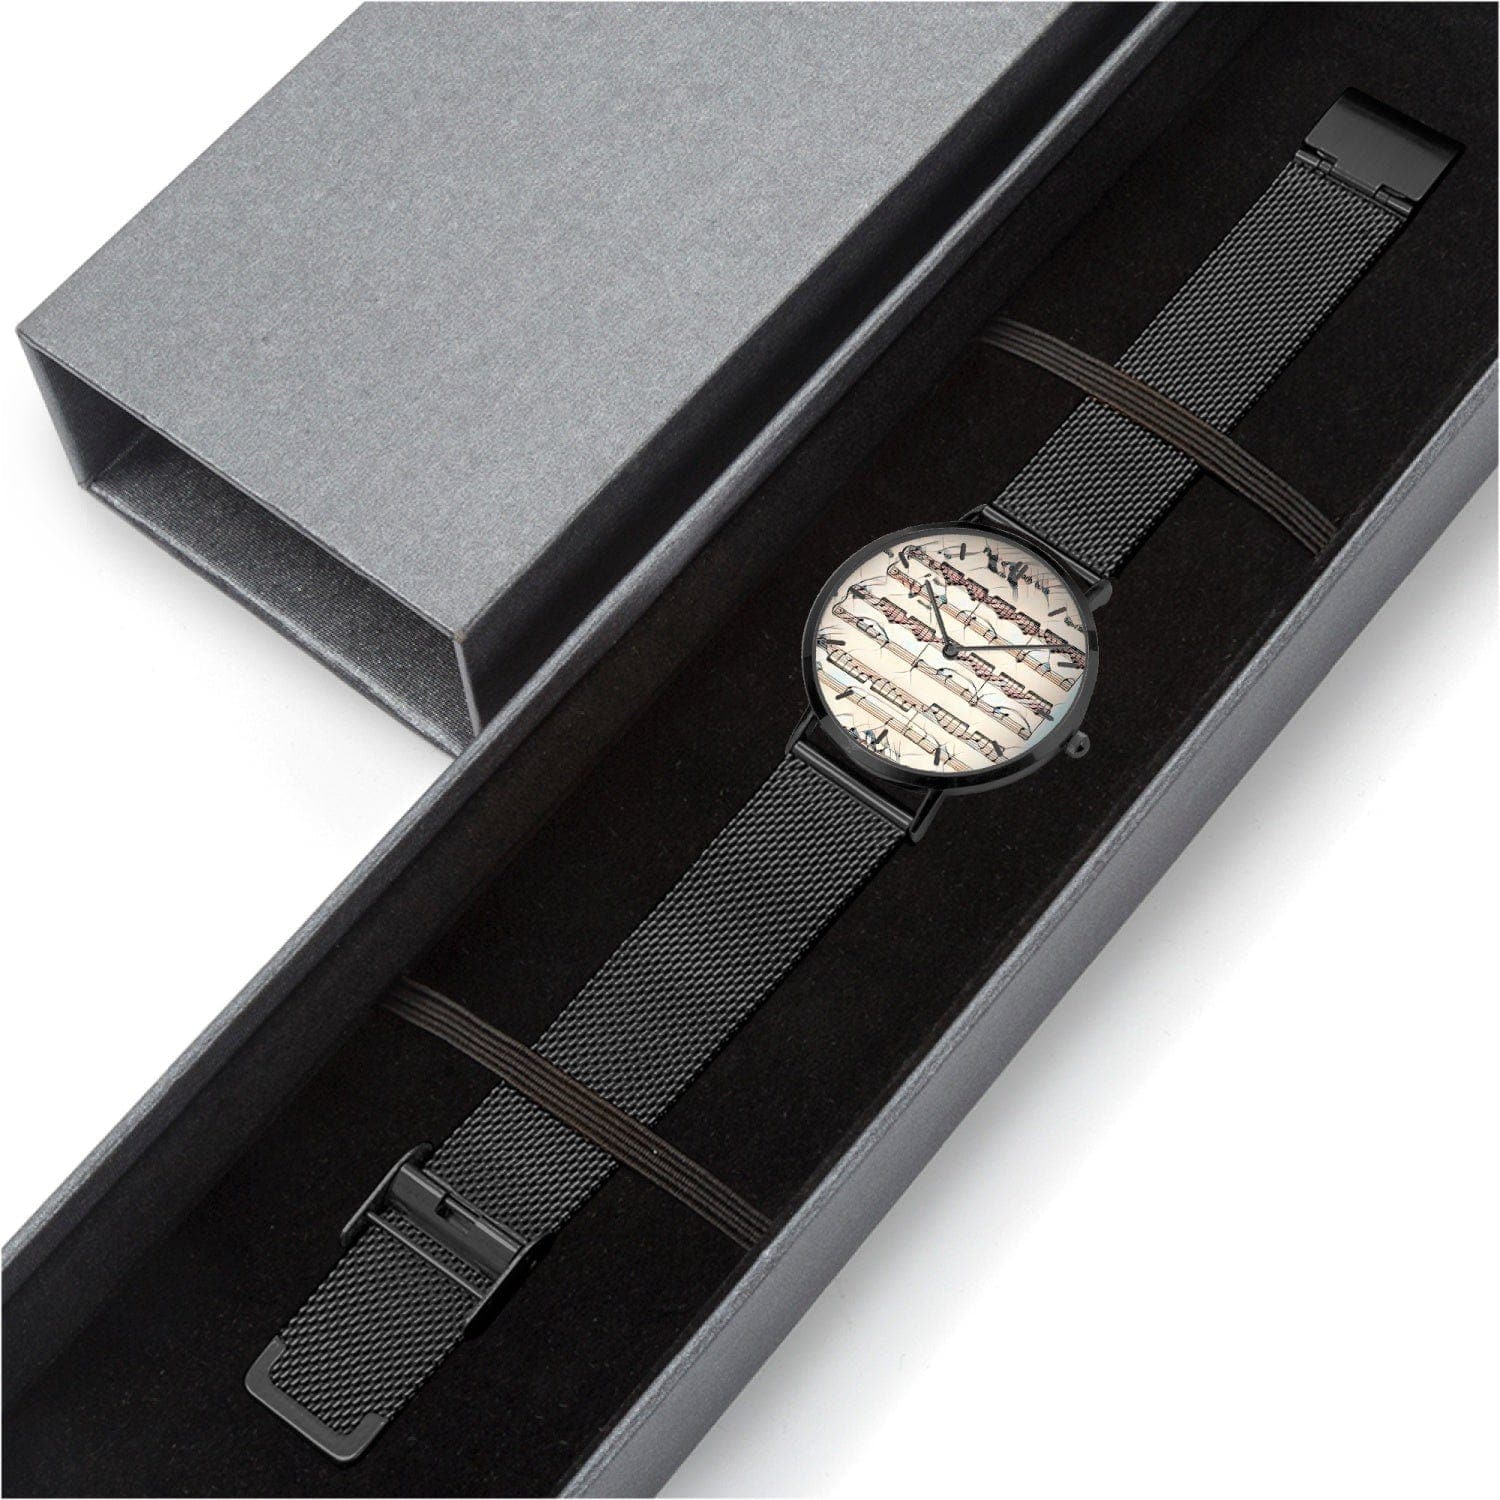 Music Time. Fashion Ultra-thin Stainless Steel Quartz Watch. Designer watch by Sensus Studio design